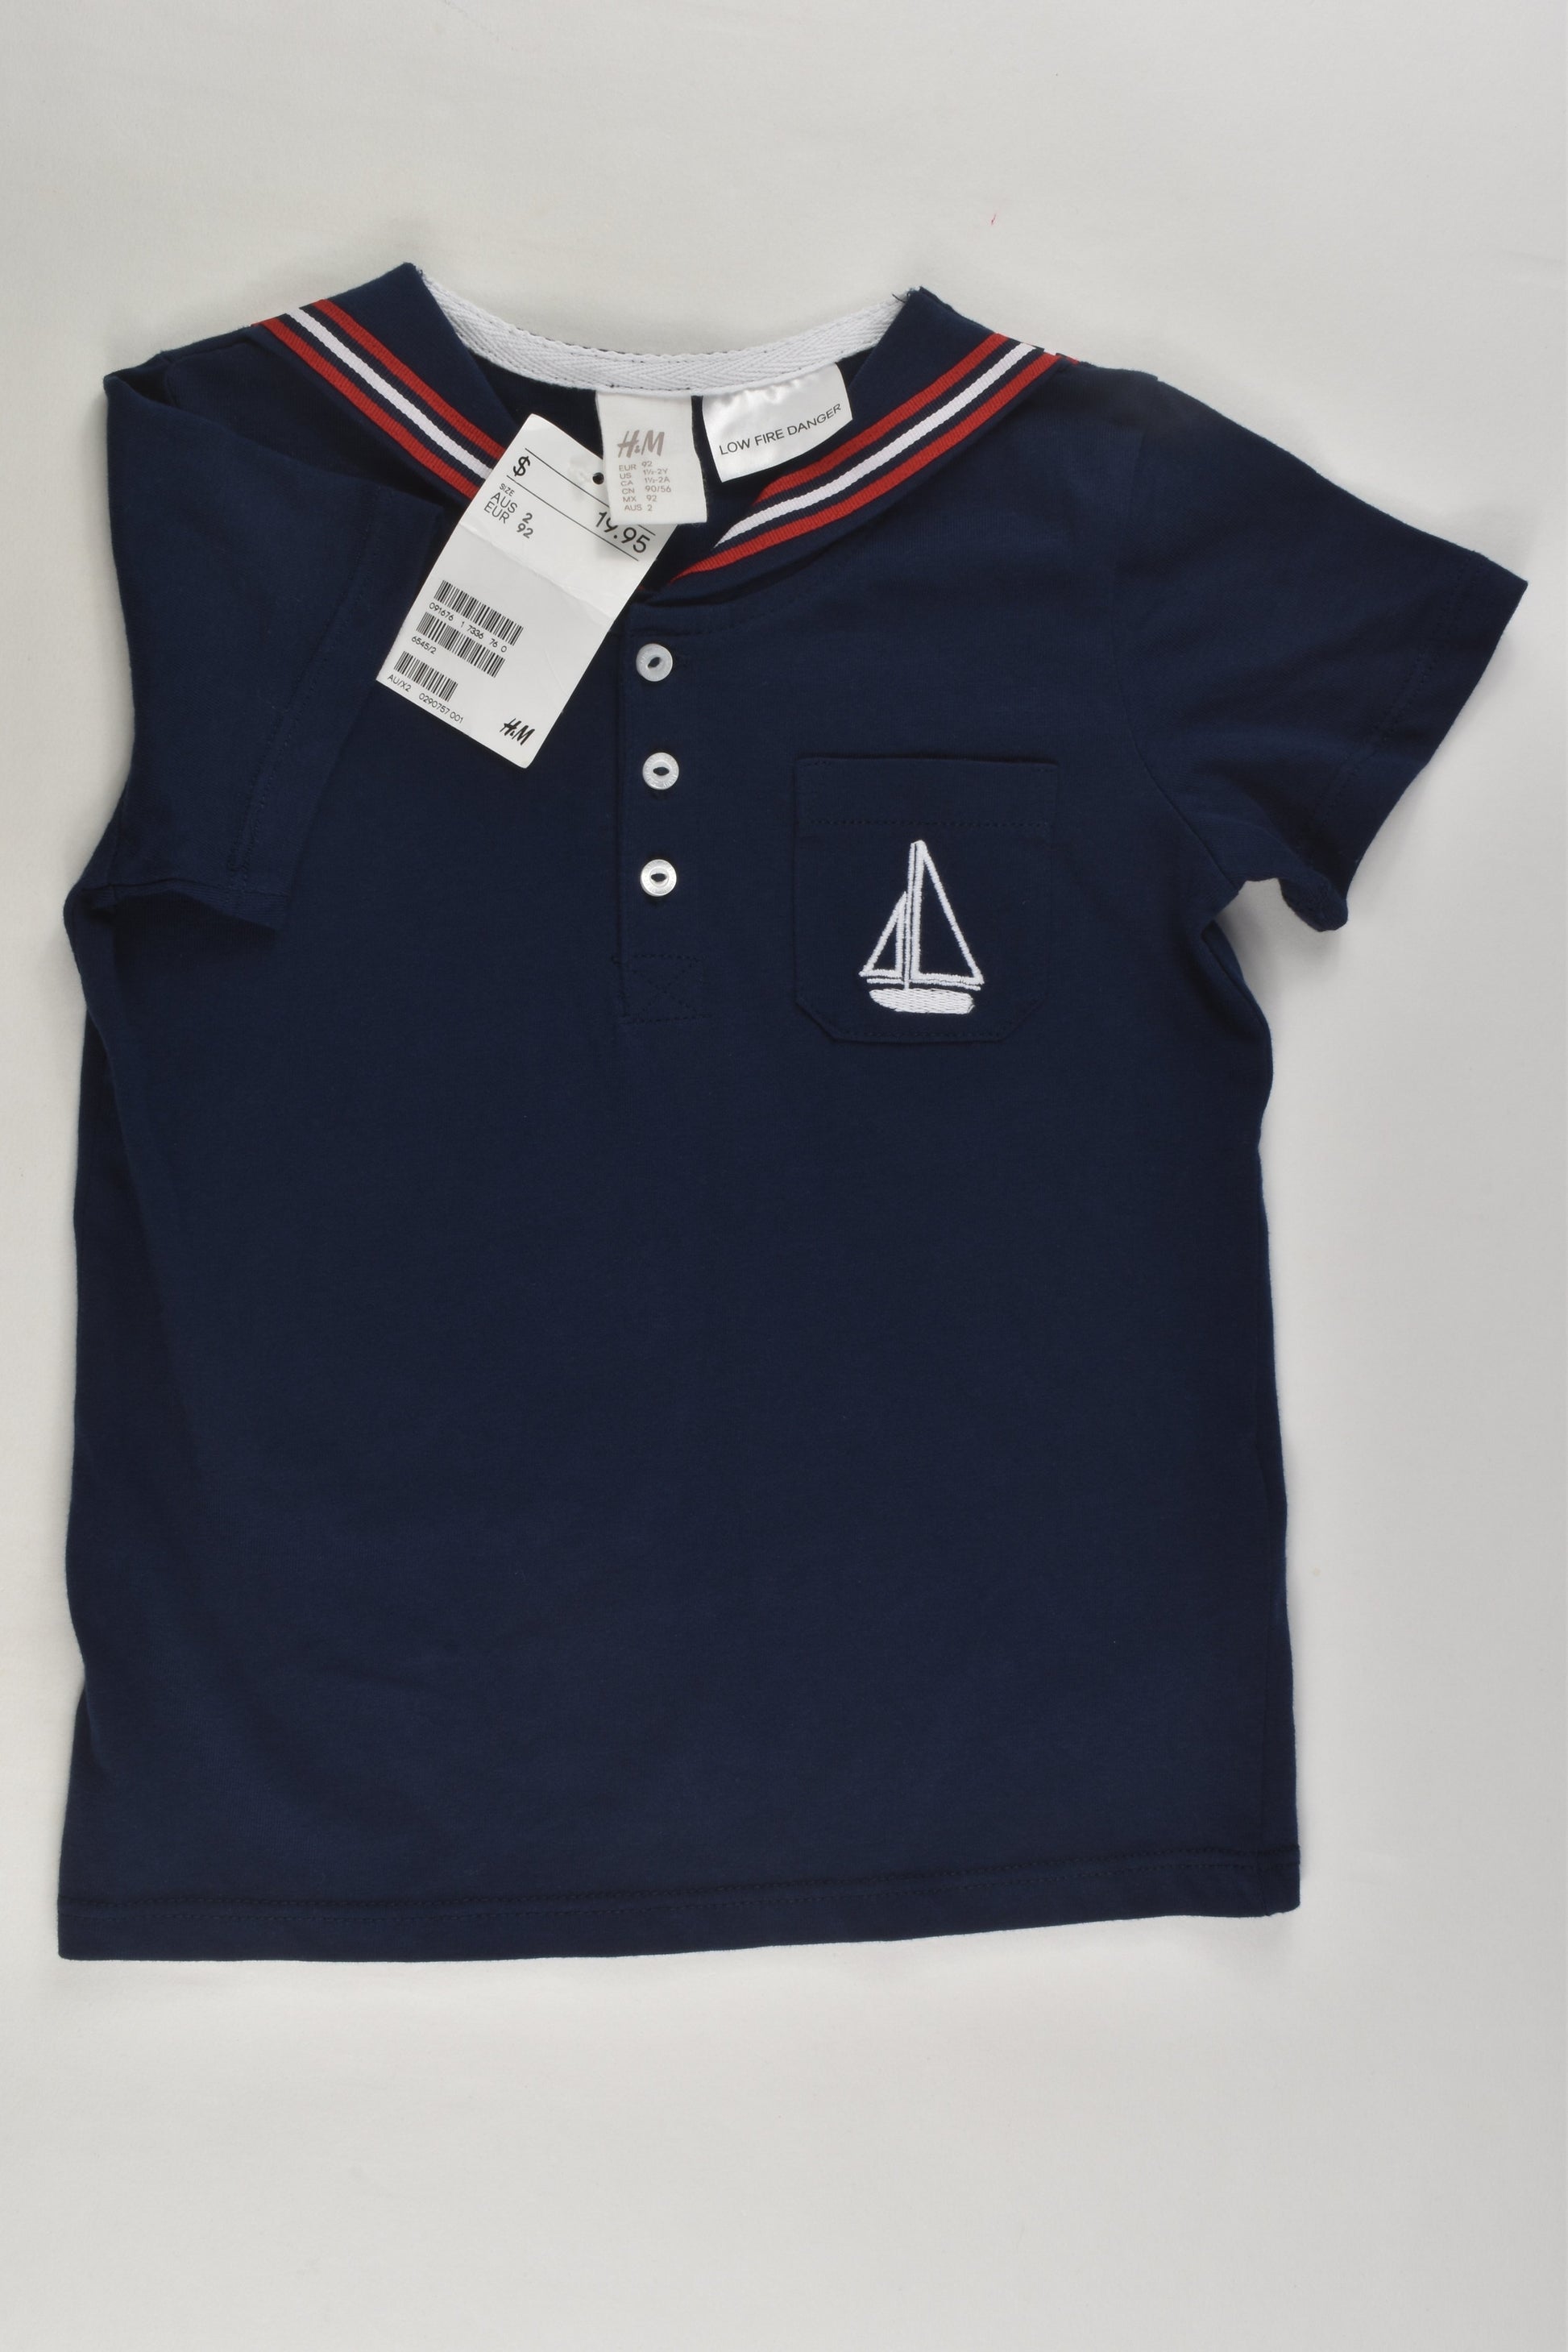 NEW H&M Size 2 Nautical T-shirt